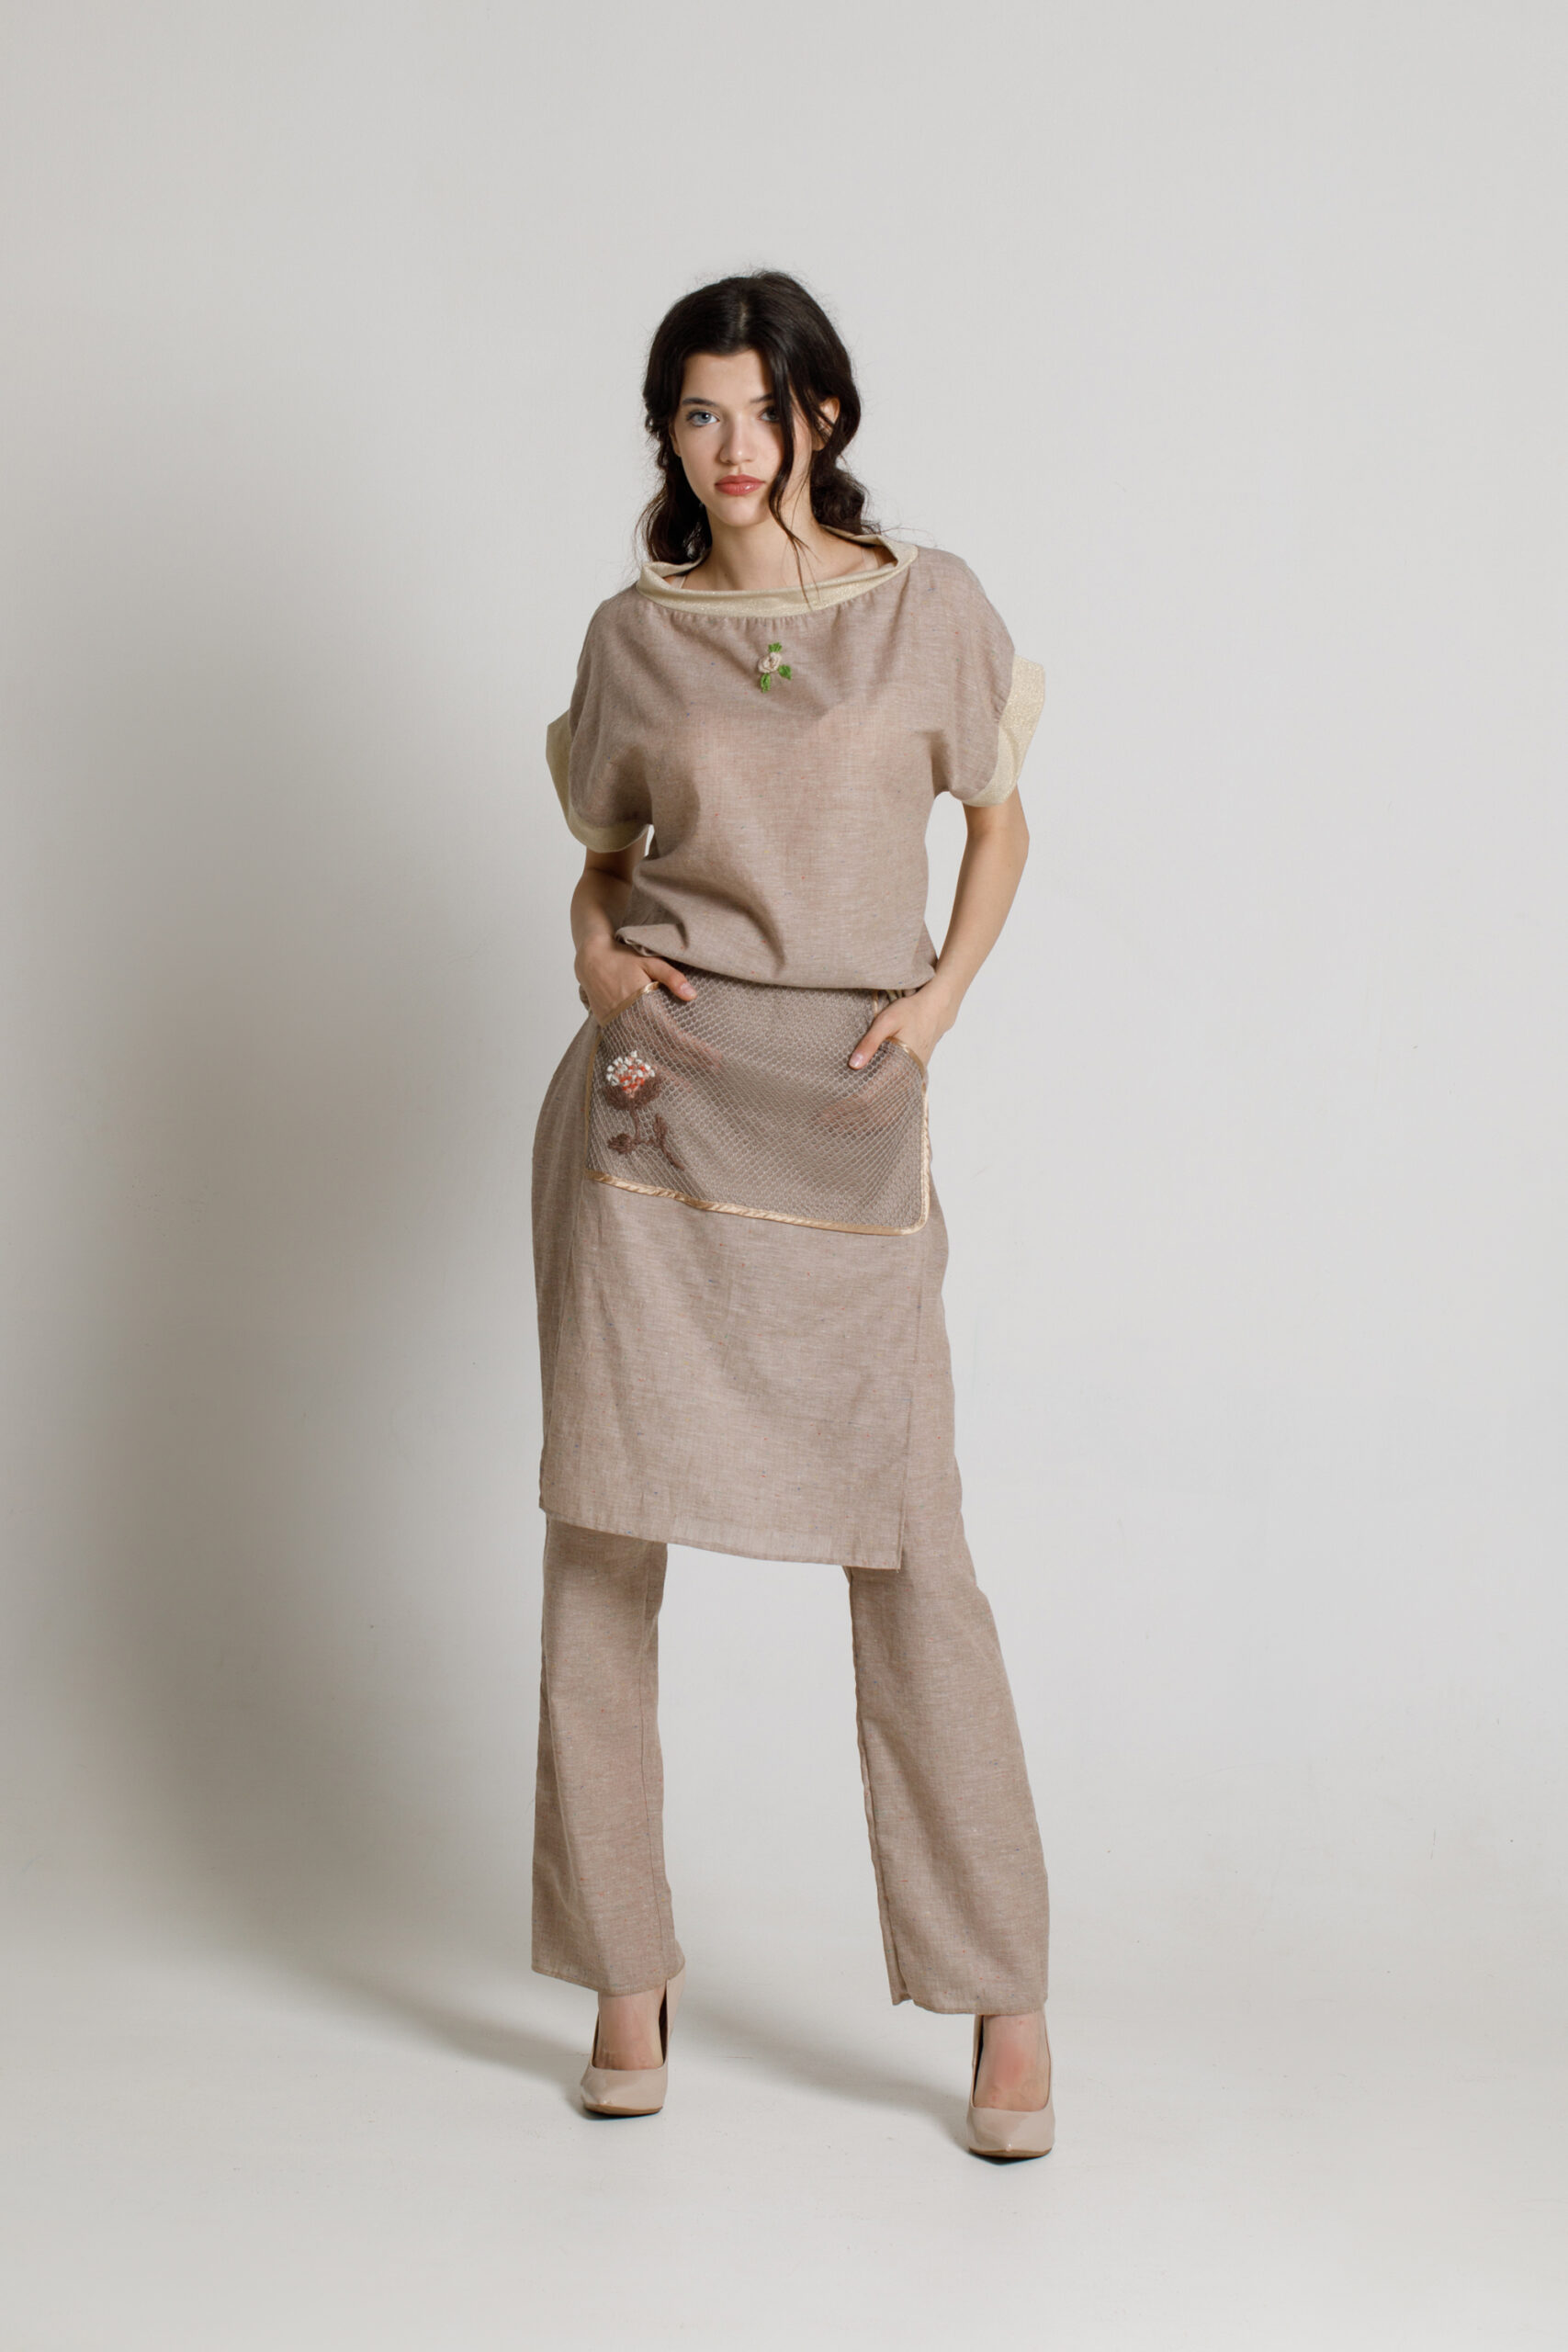 LEY casual pants in poplin and mesh. Natural fabrics, original design, handmade embroidery